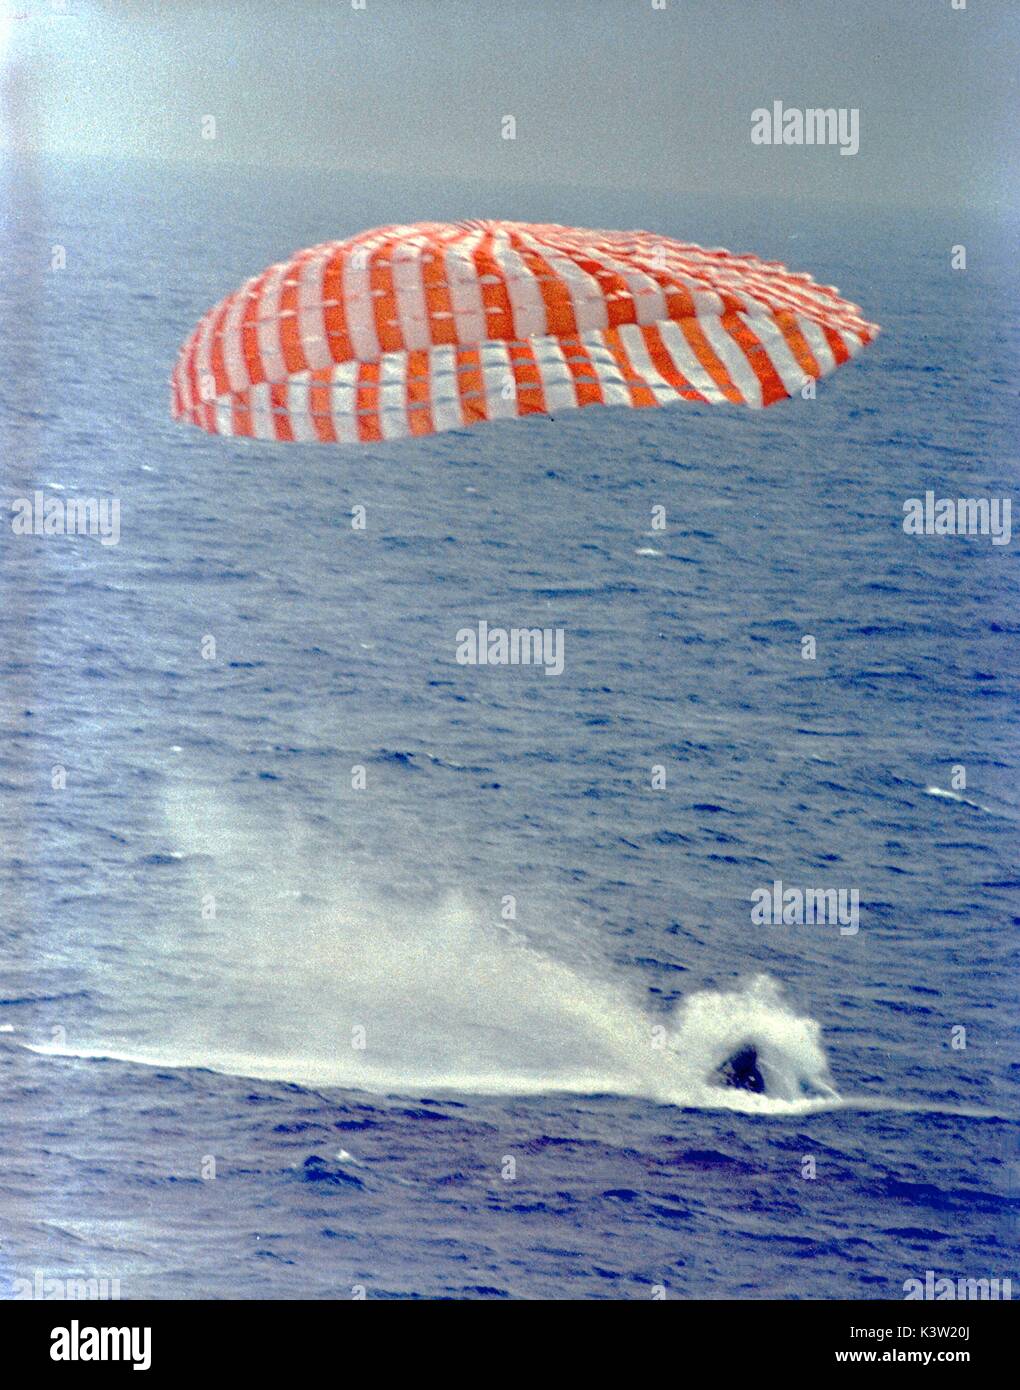 NASA Gemini 9 mission astronauts Gene Cernan and Thomas Stafford splash down in the ocean using retro-rocket parachutes during their reentry flight home June 6, 1966 in the Atlantic Ocean.  (photo by NASA Photo via Planetpix) Stock Photo